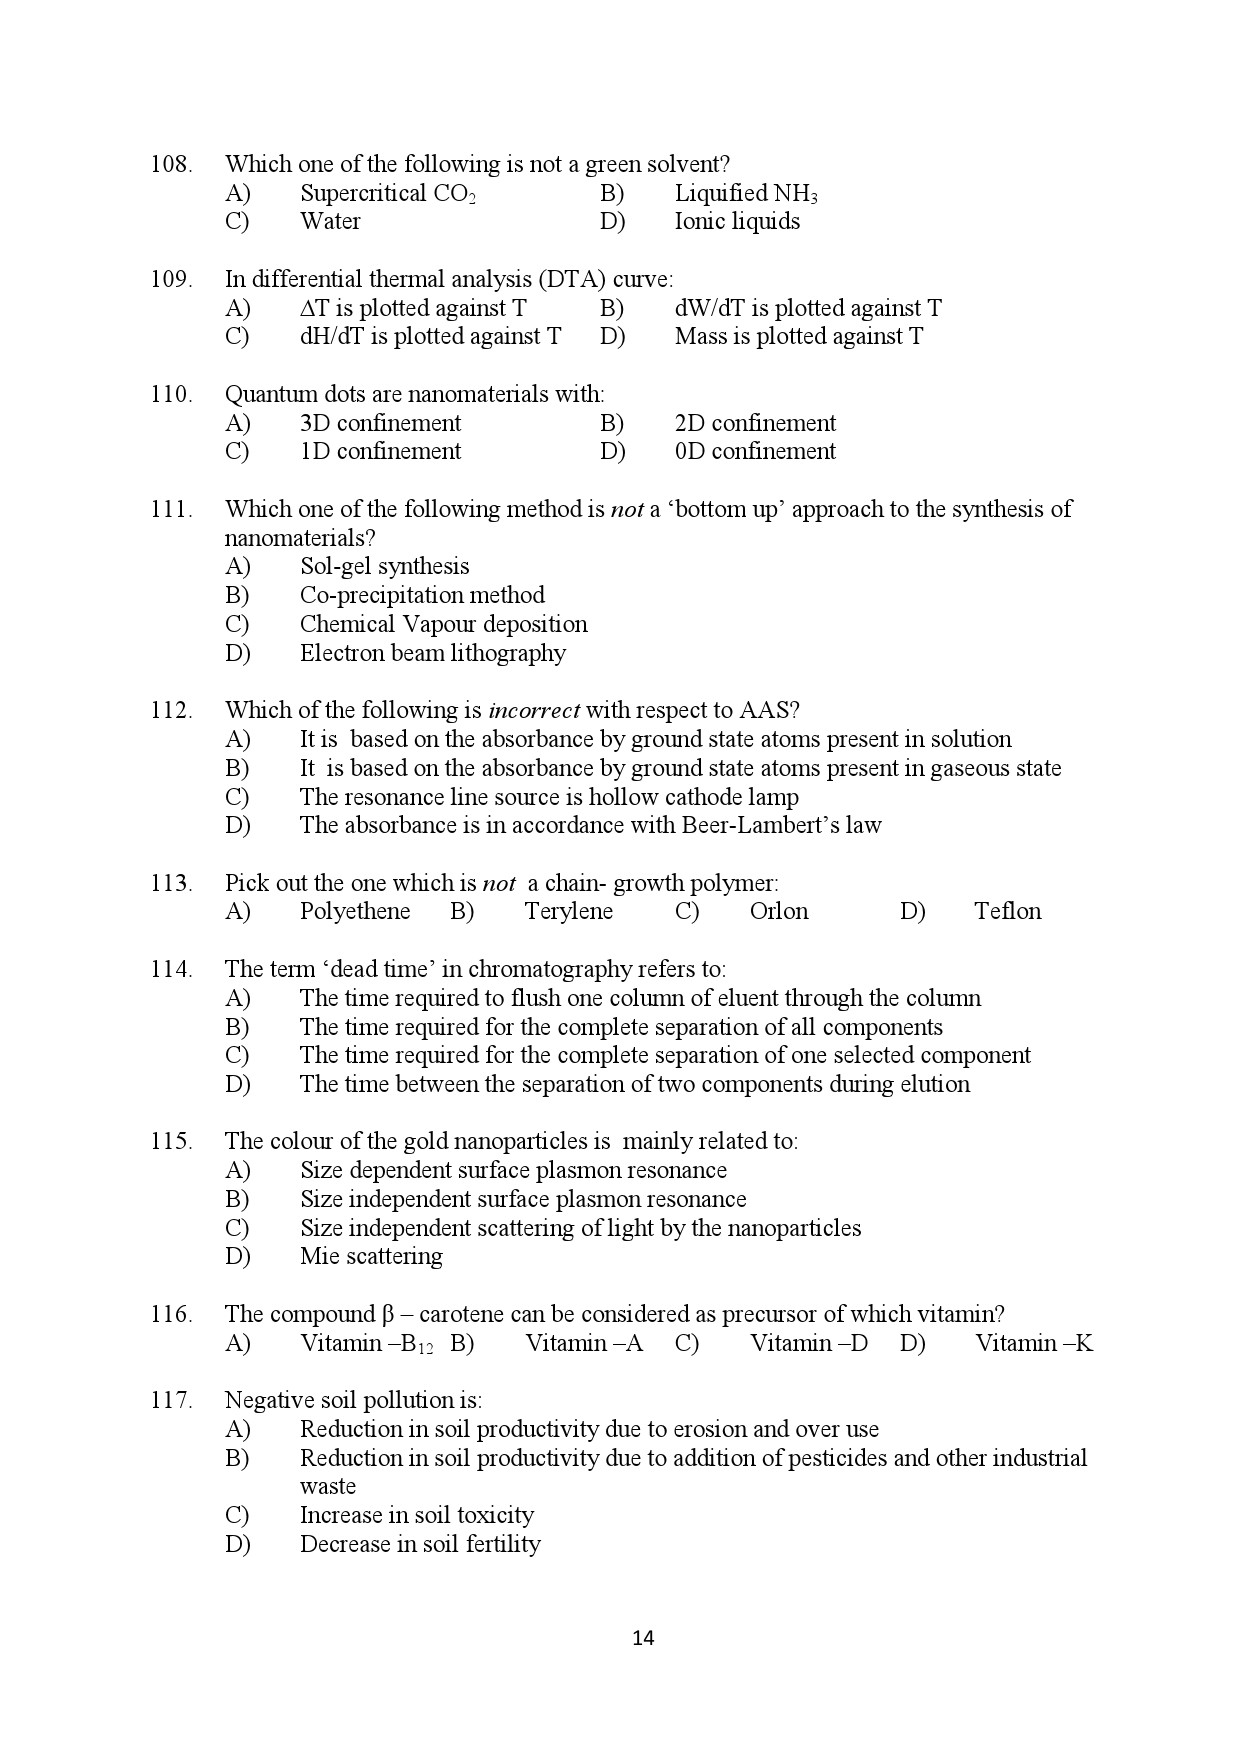 Kerala SET Chemistry Exam Question Paper February 2020 14